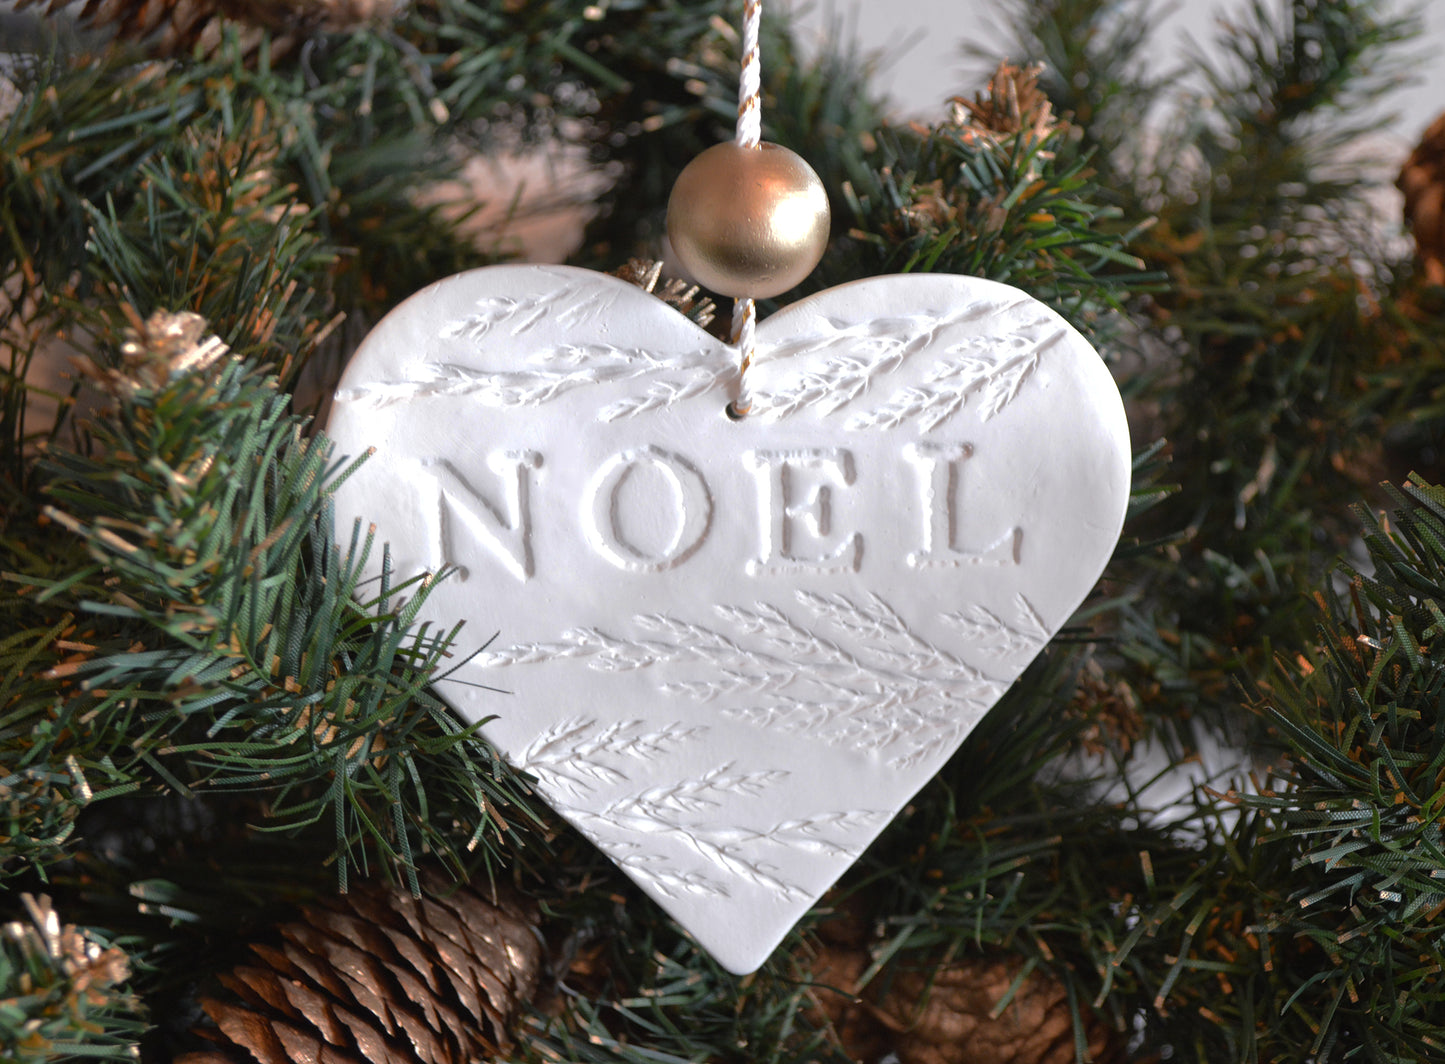 3 pure white heart shaped NOEL ornaments